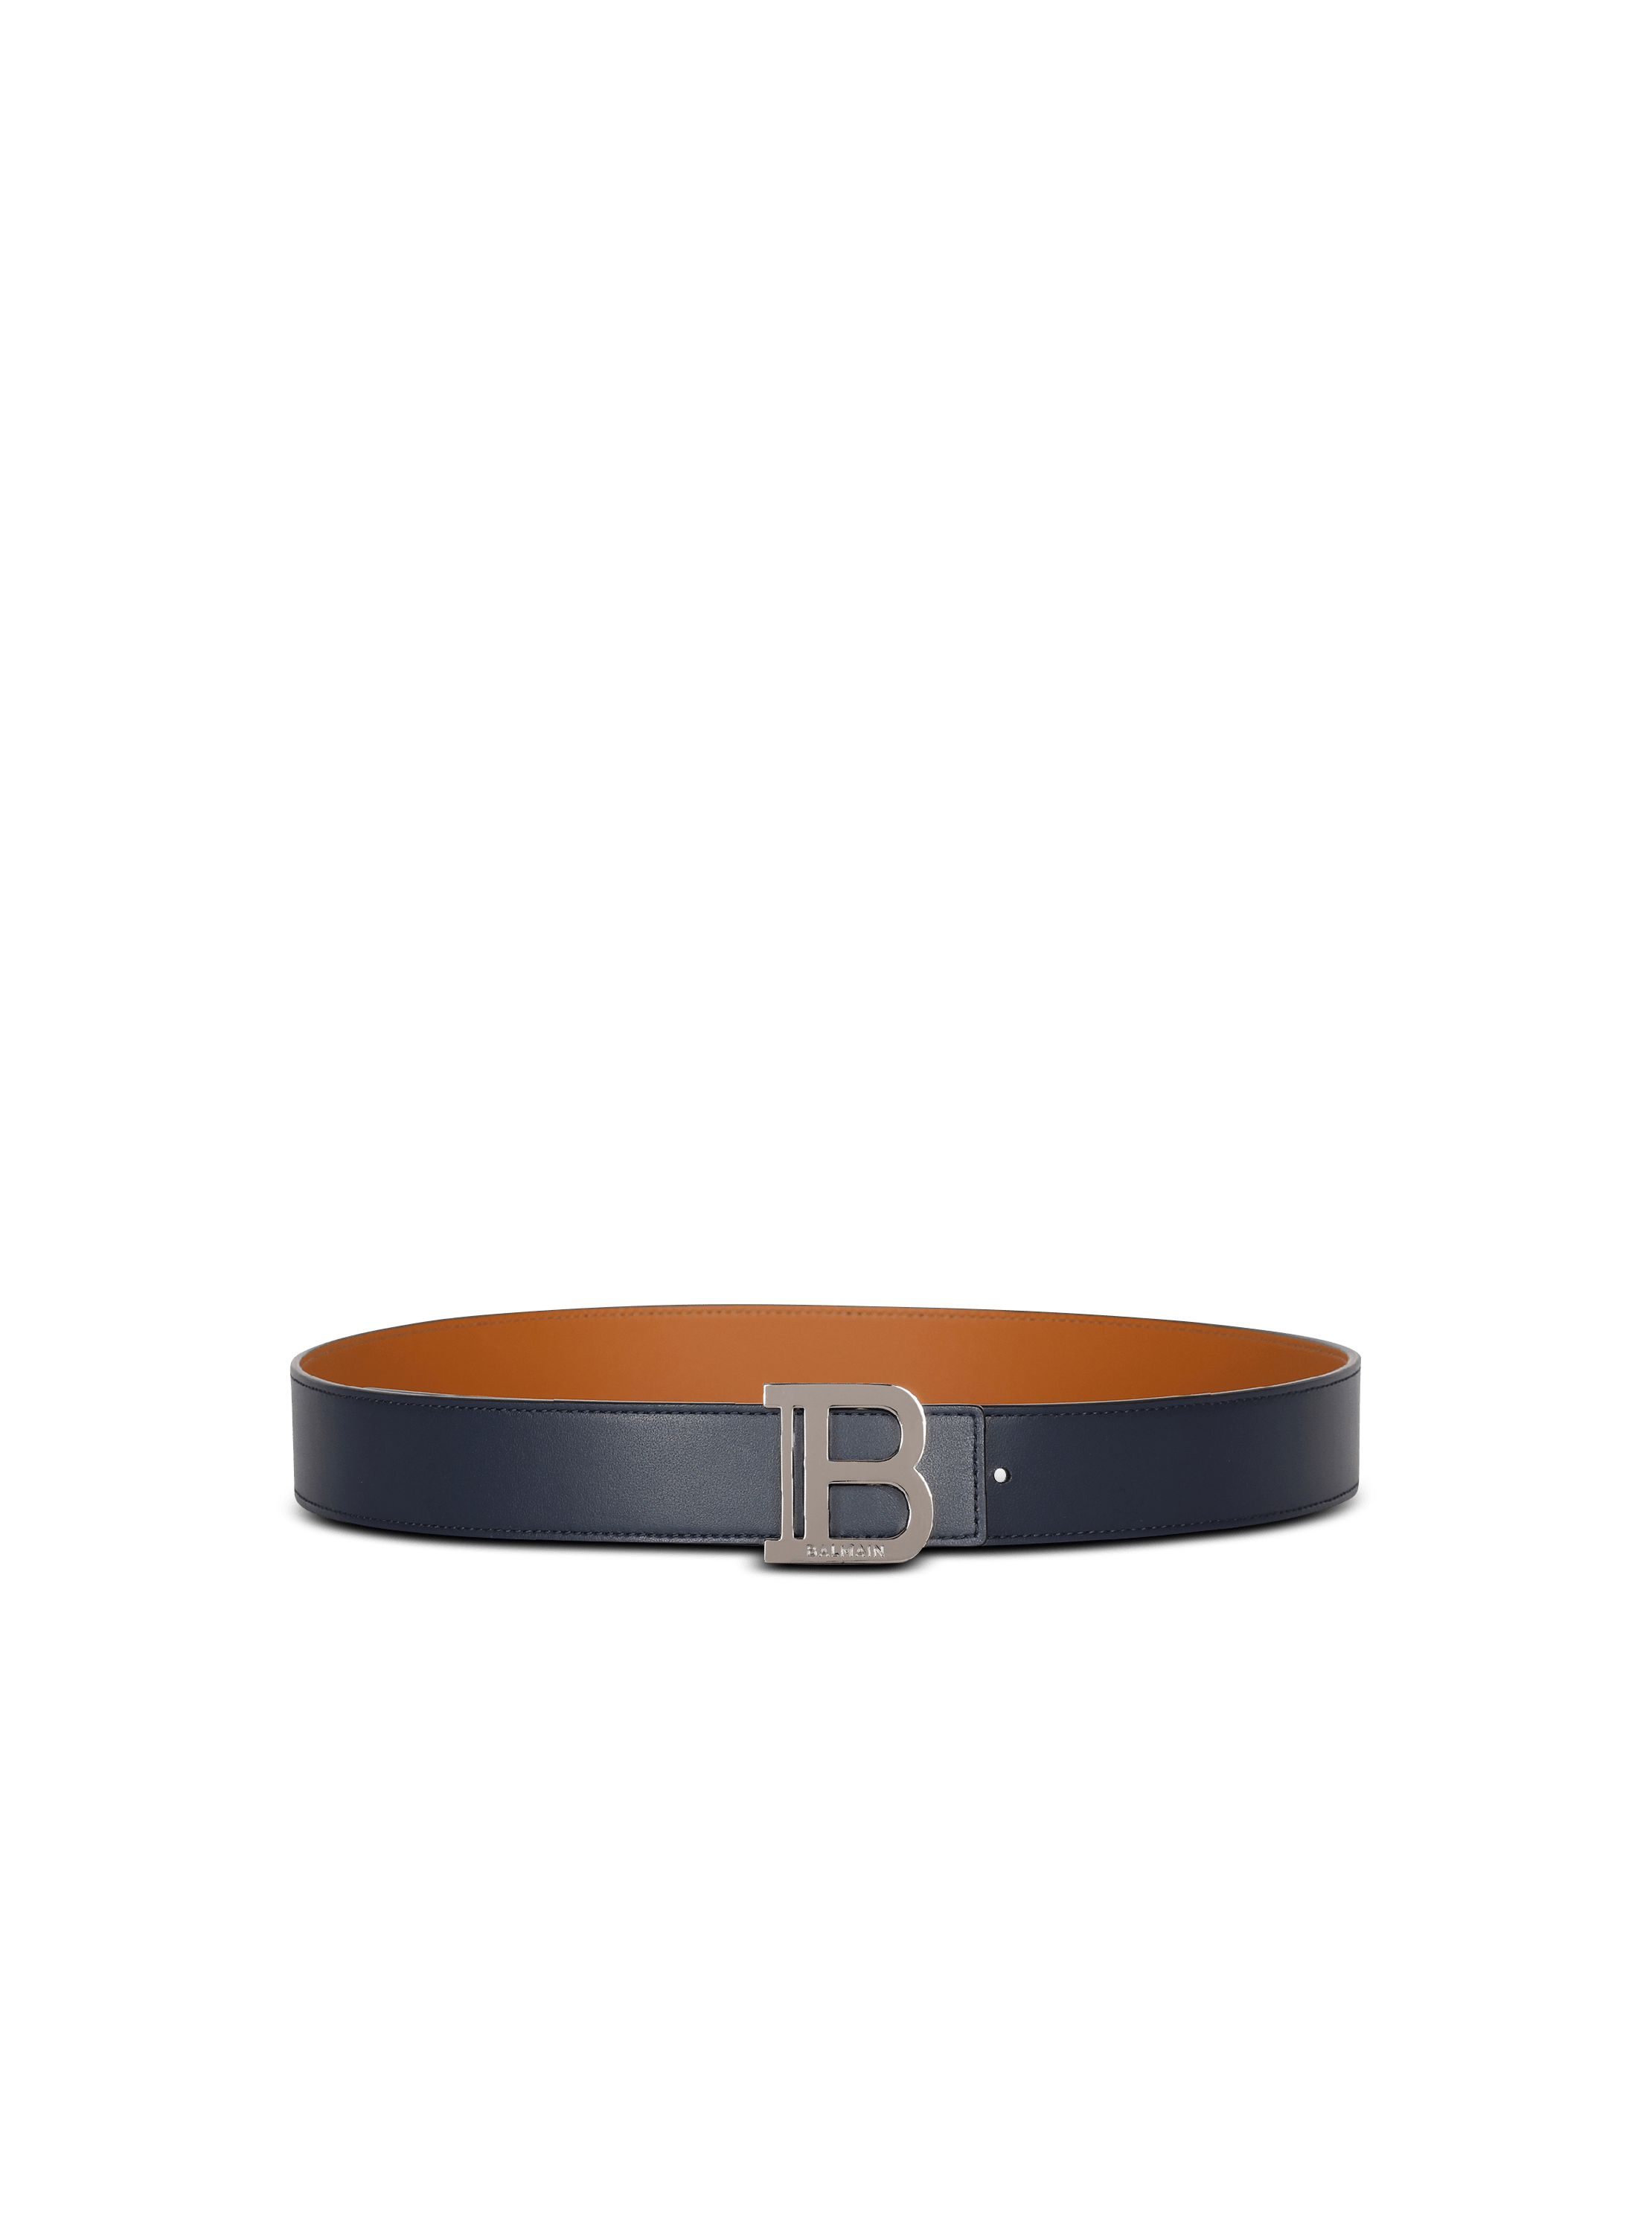 Cinturón B-Belt de piel